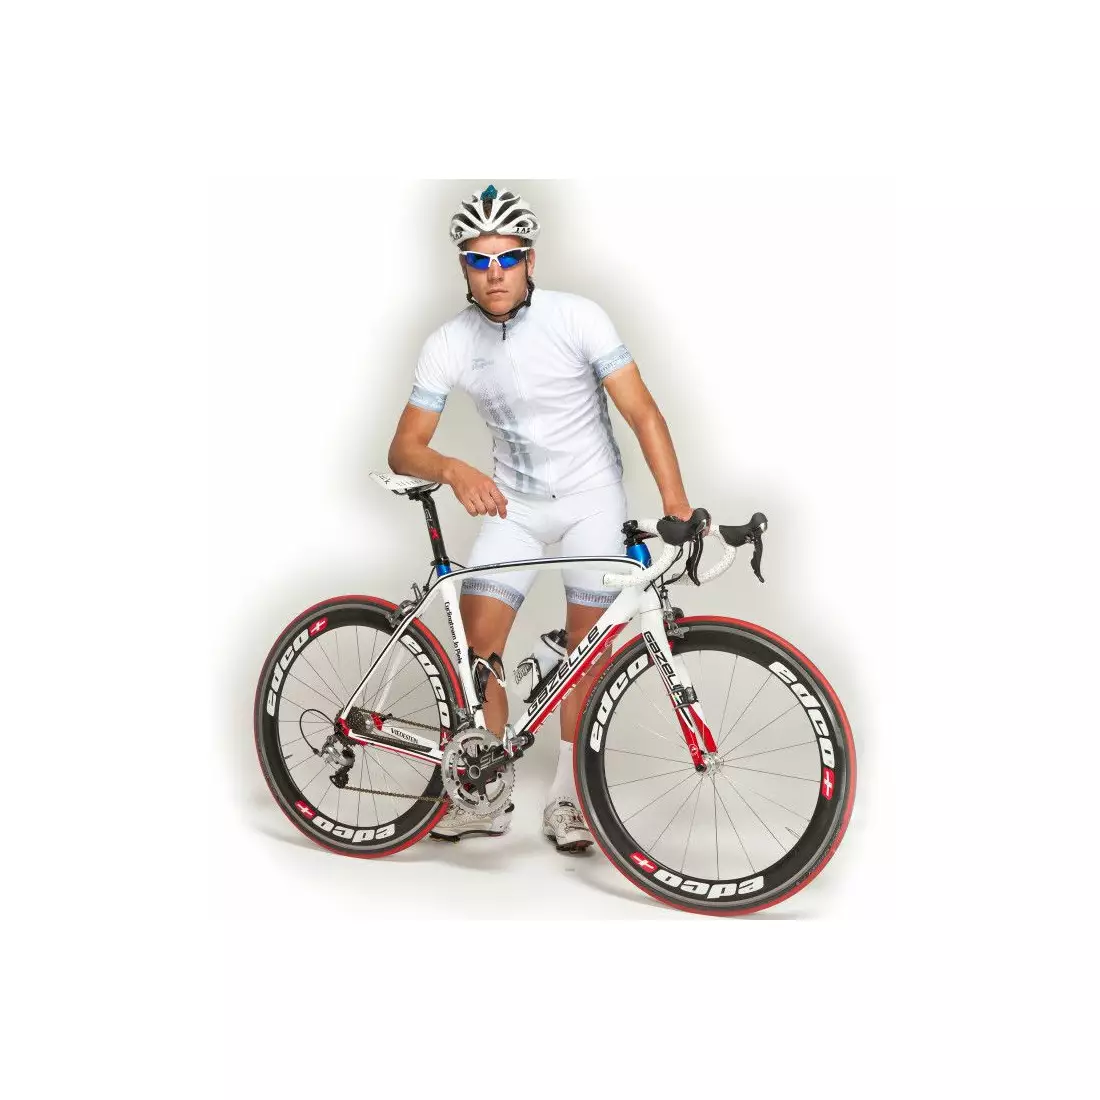 ROGELLI USCIO - ultralight men's cycling jersey